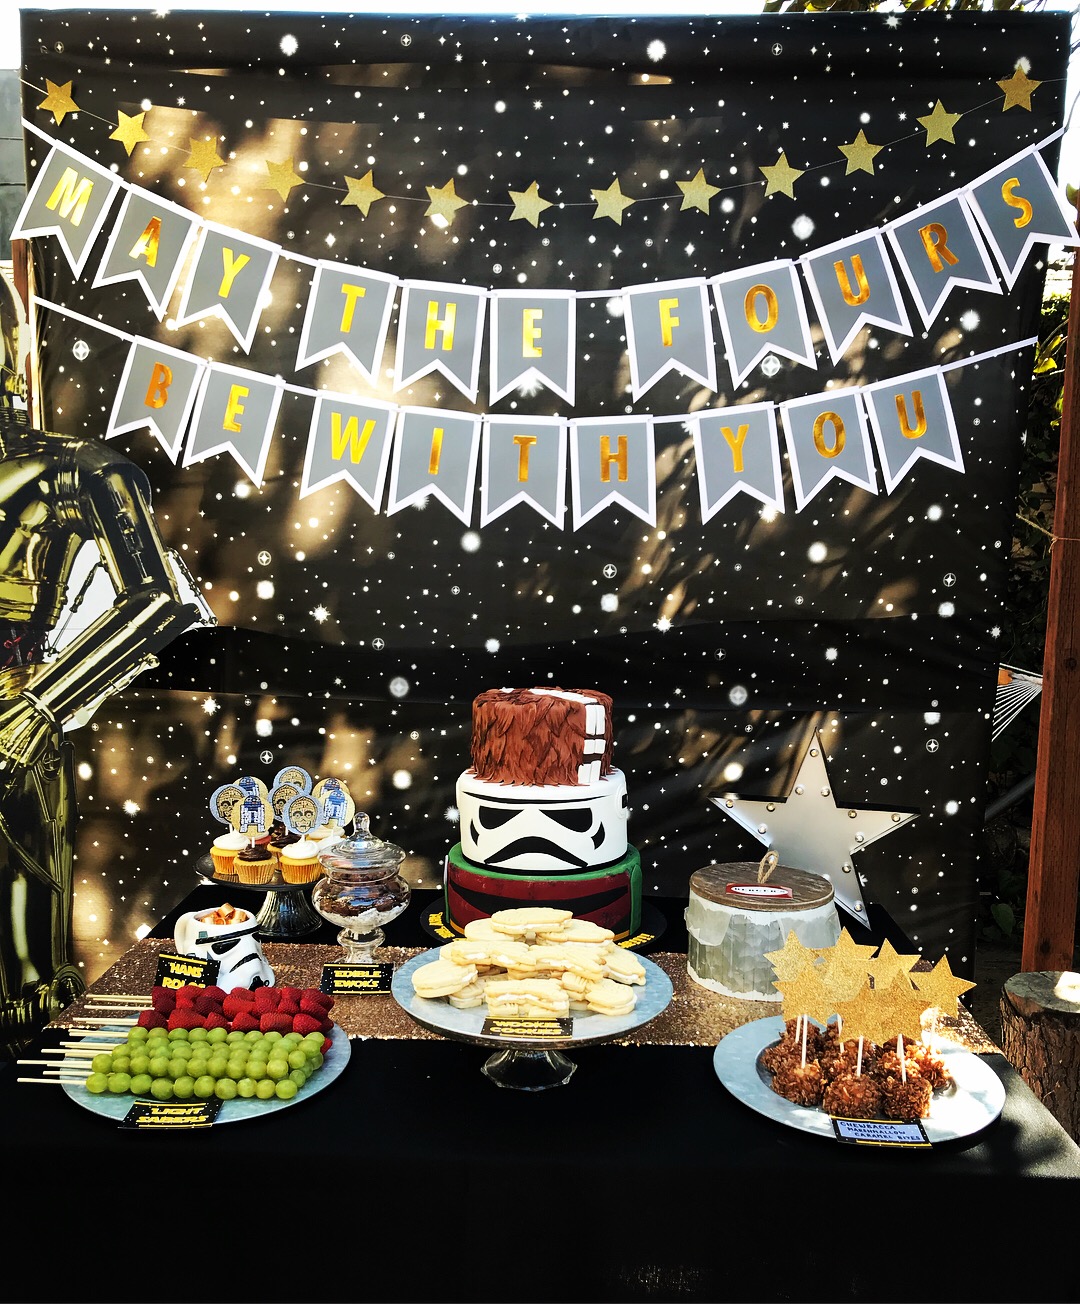 Star Wars Paper Straws Star Wars Party Straws Wars Birthday Star Wars  Decoration Star Wars Party 10 Straws 